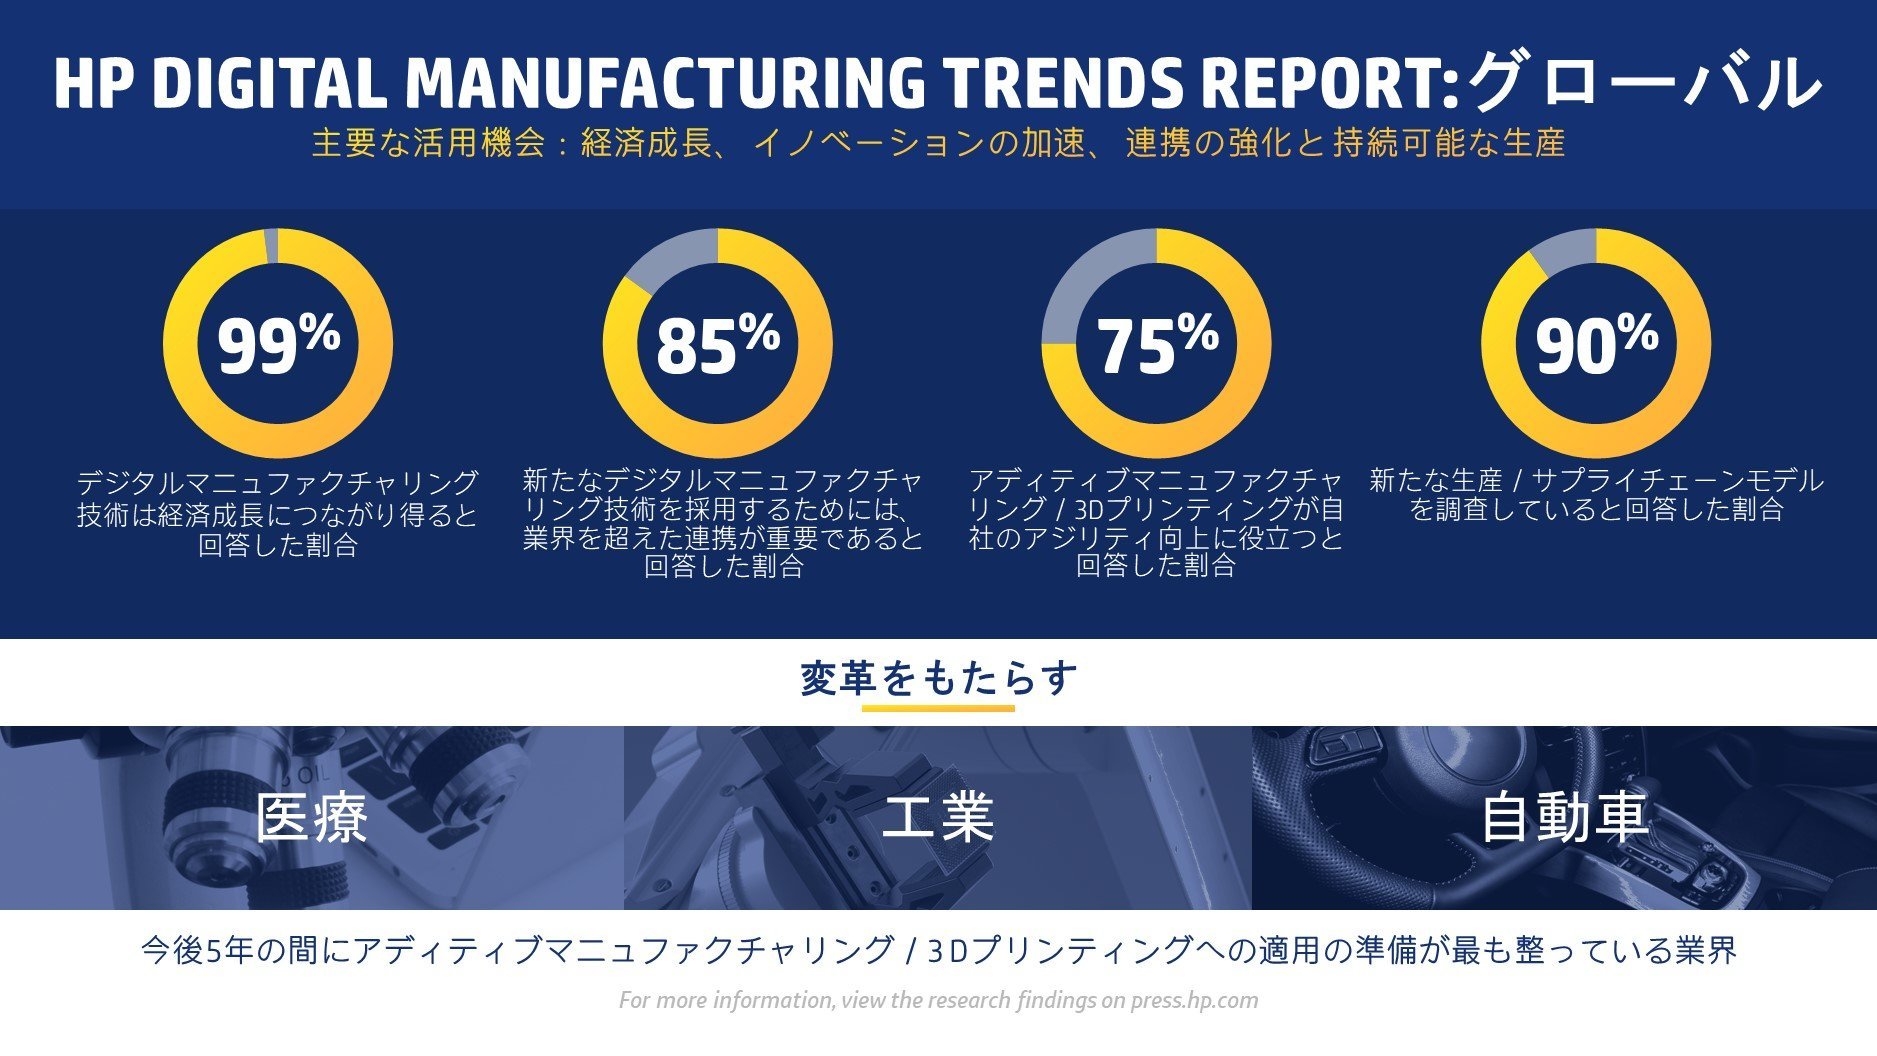 uHP Digital Manufacturing Trend ReportṽCtHOtBbNX oTFHP mNbNŊgn